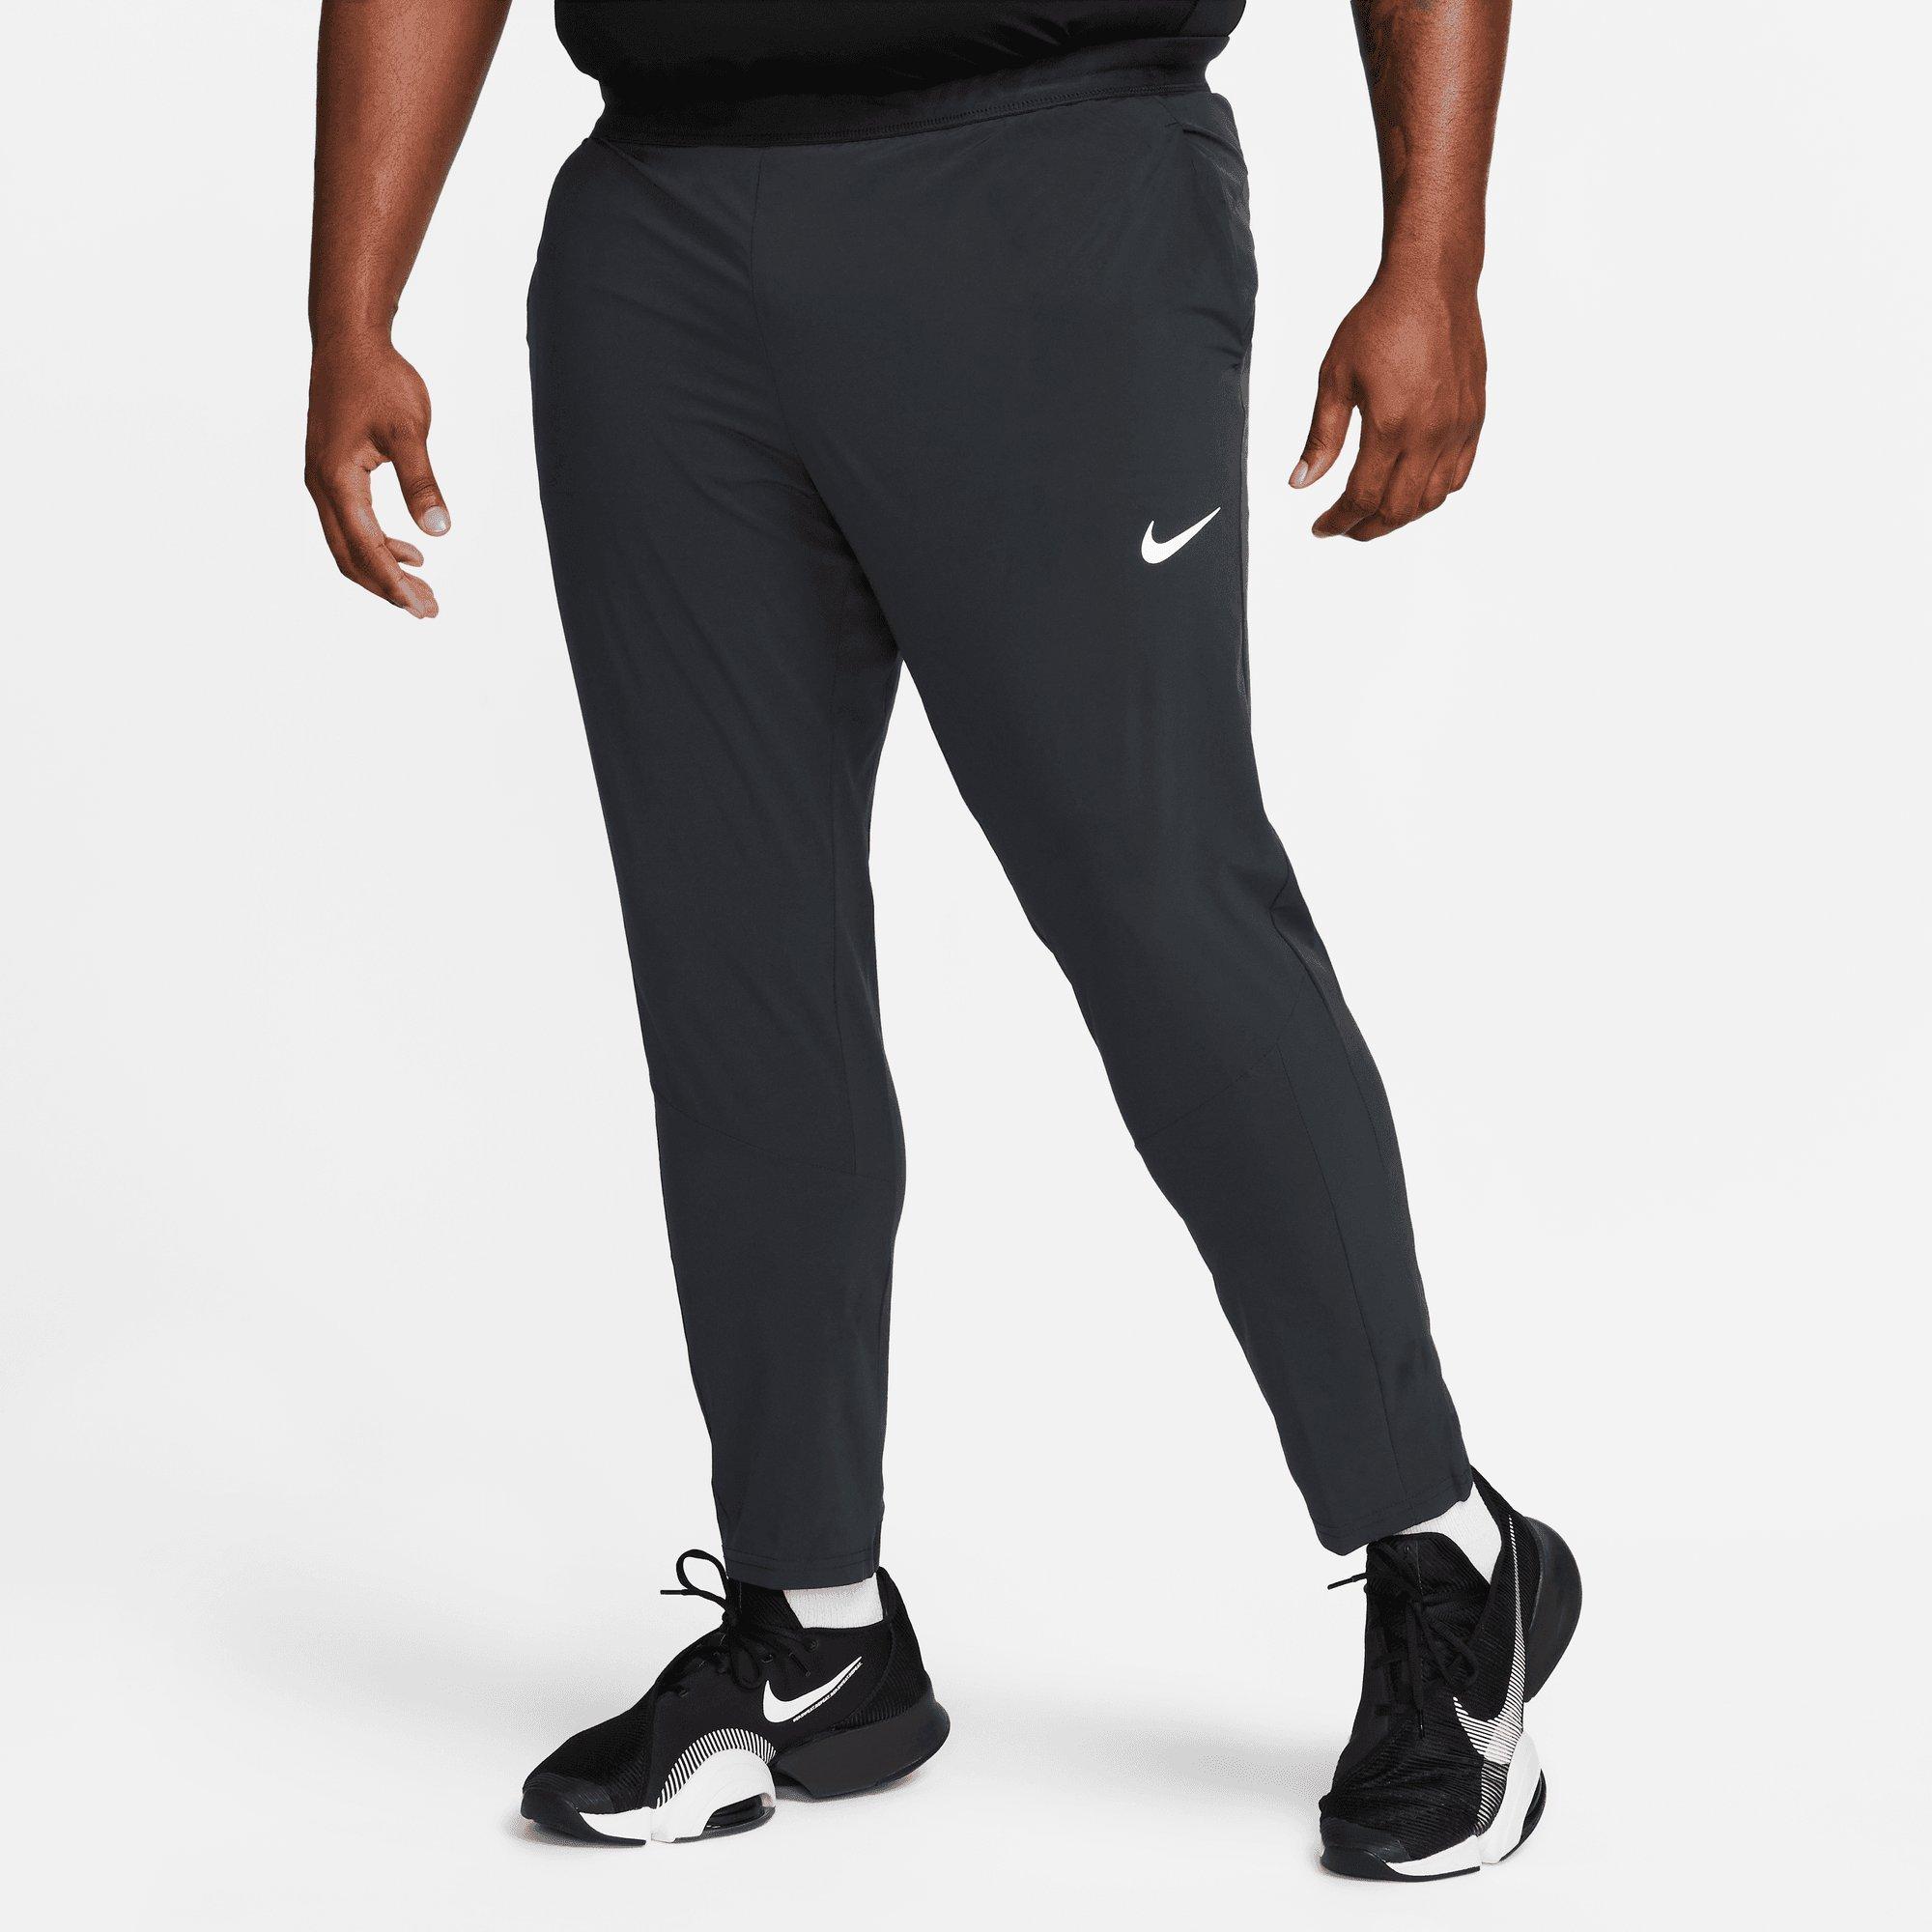 Men's Pro Dri-FIT Vent Max Training Pant from Nike